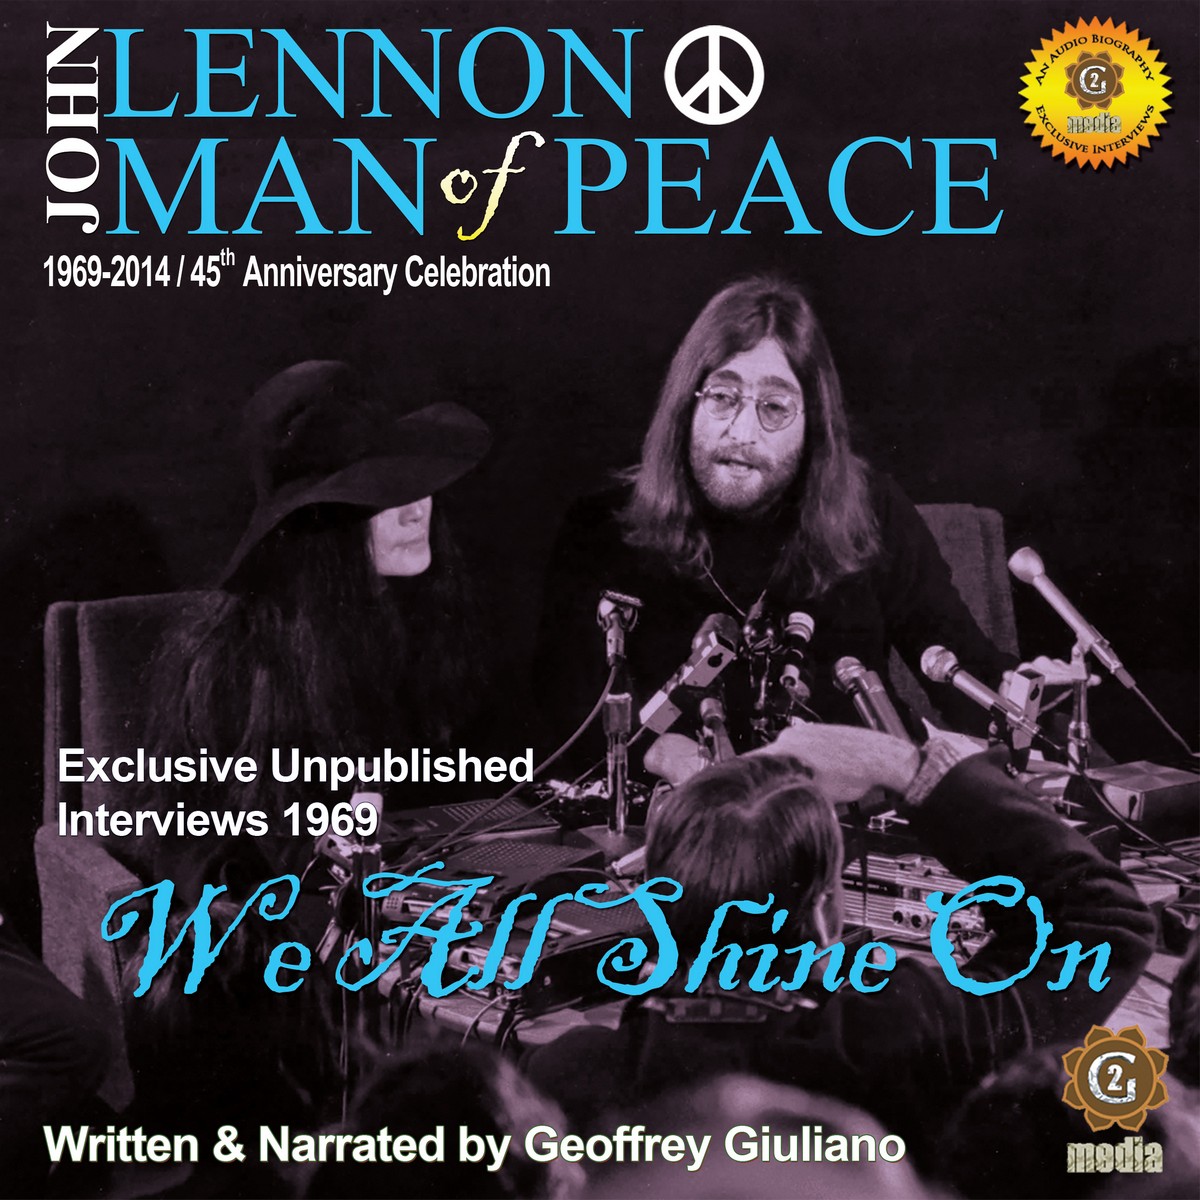 John Lennon Man of Peace, Part 4: We All Shine On